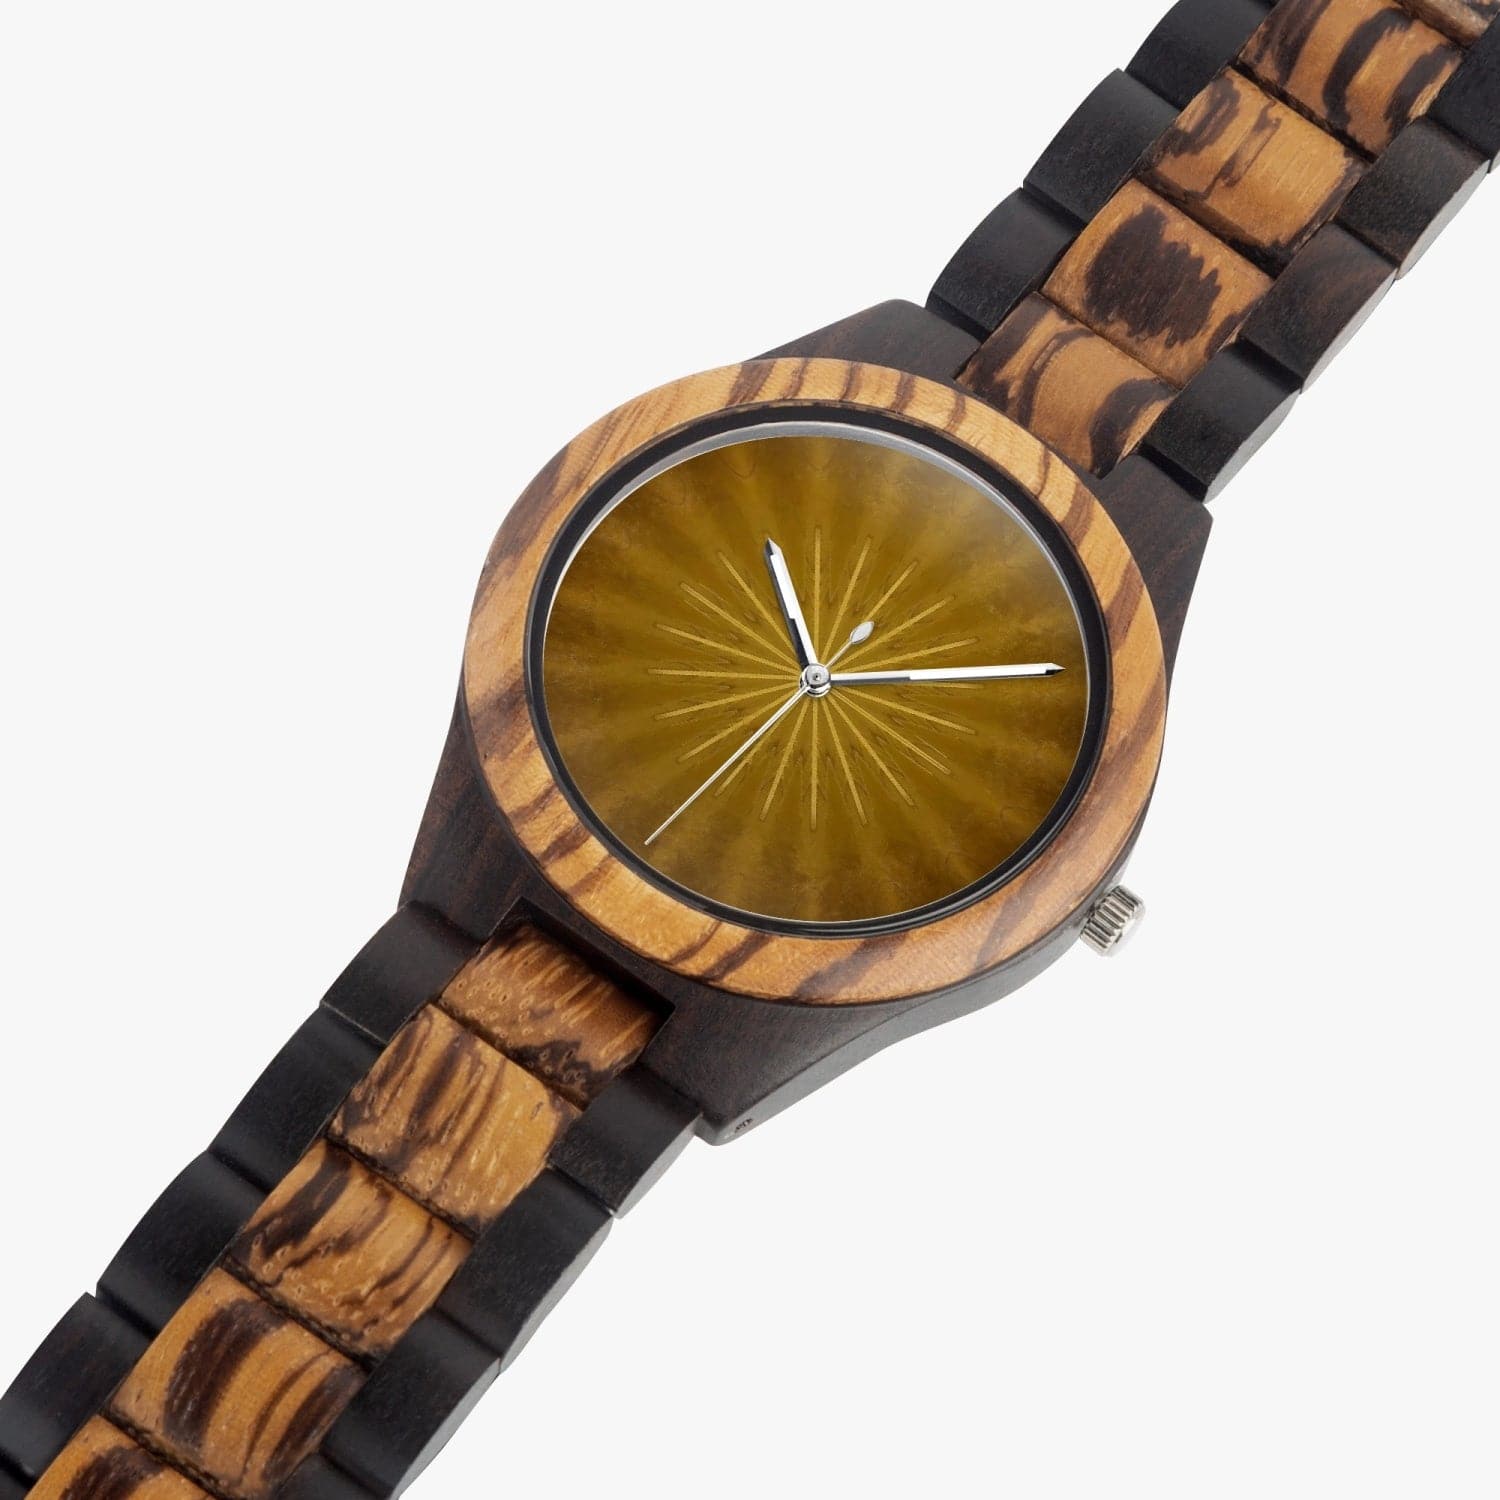 'Gold on Brown 5' Ebony Wooden Watch, Designed by Sensus  Studio Design